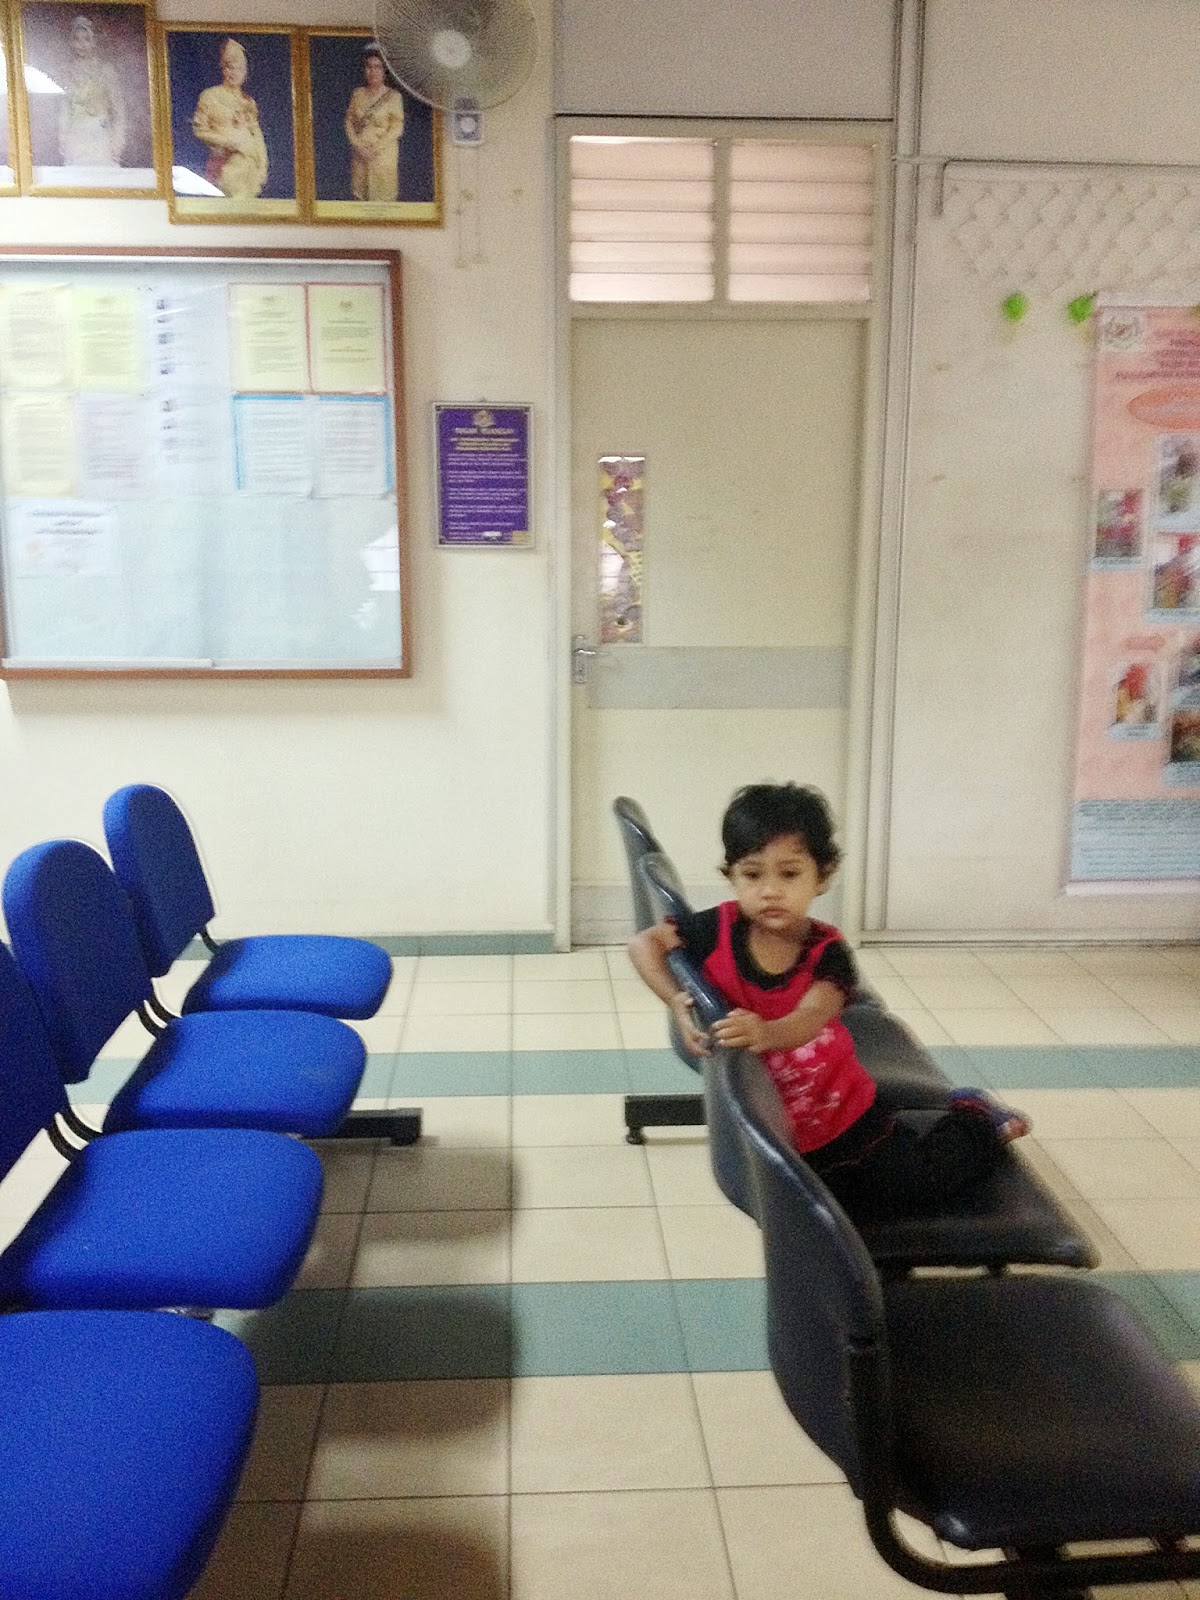 Manik suci: Lawatan umur genap 2 tahun ke ke klinik 